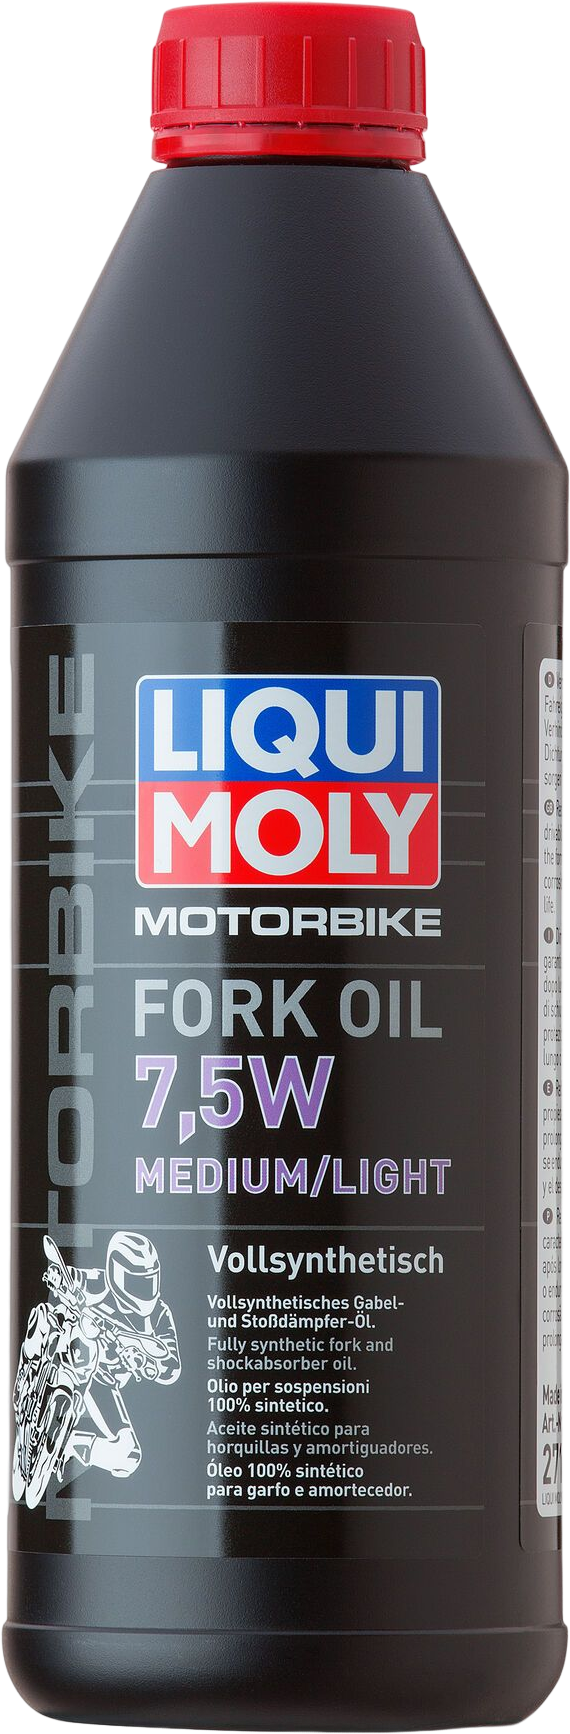 Liqui Moly Motorbike Fork Oil 7,5W medium/light, 1 lt